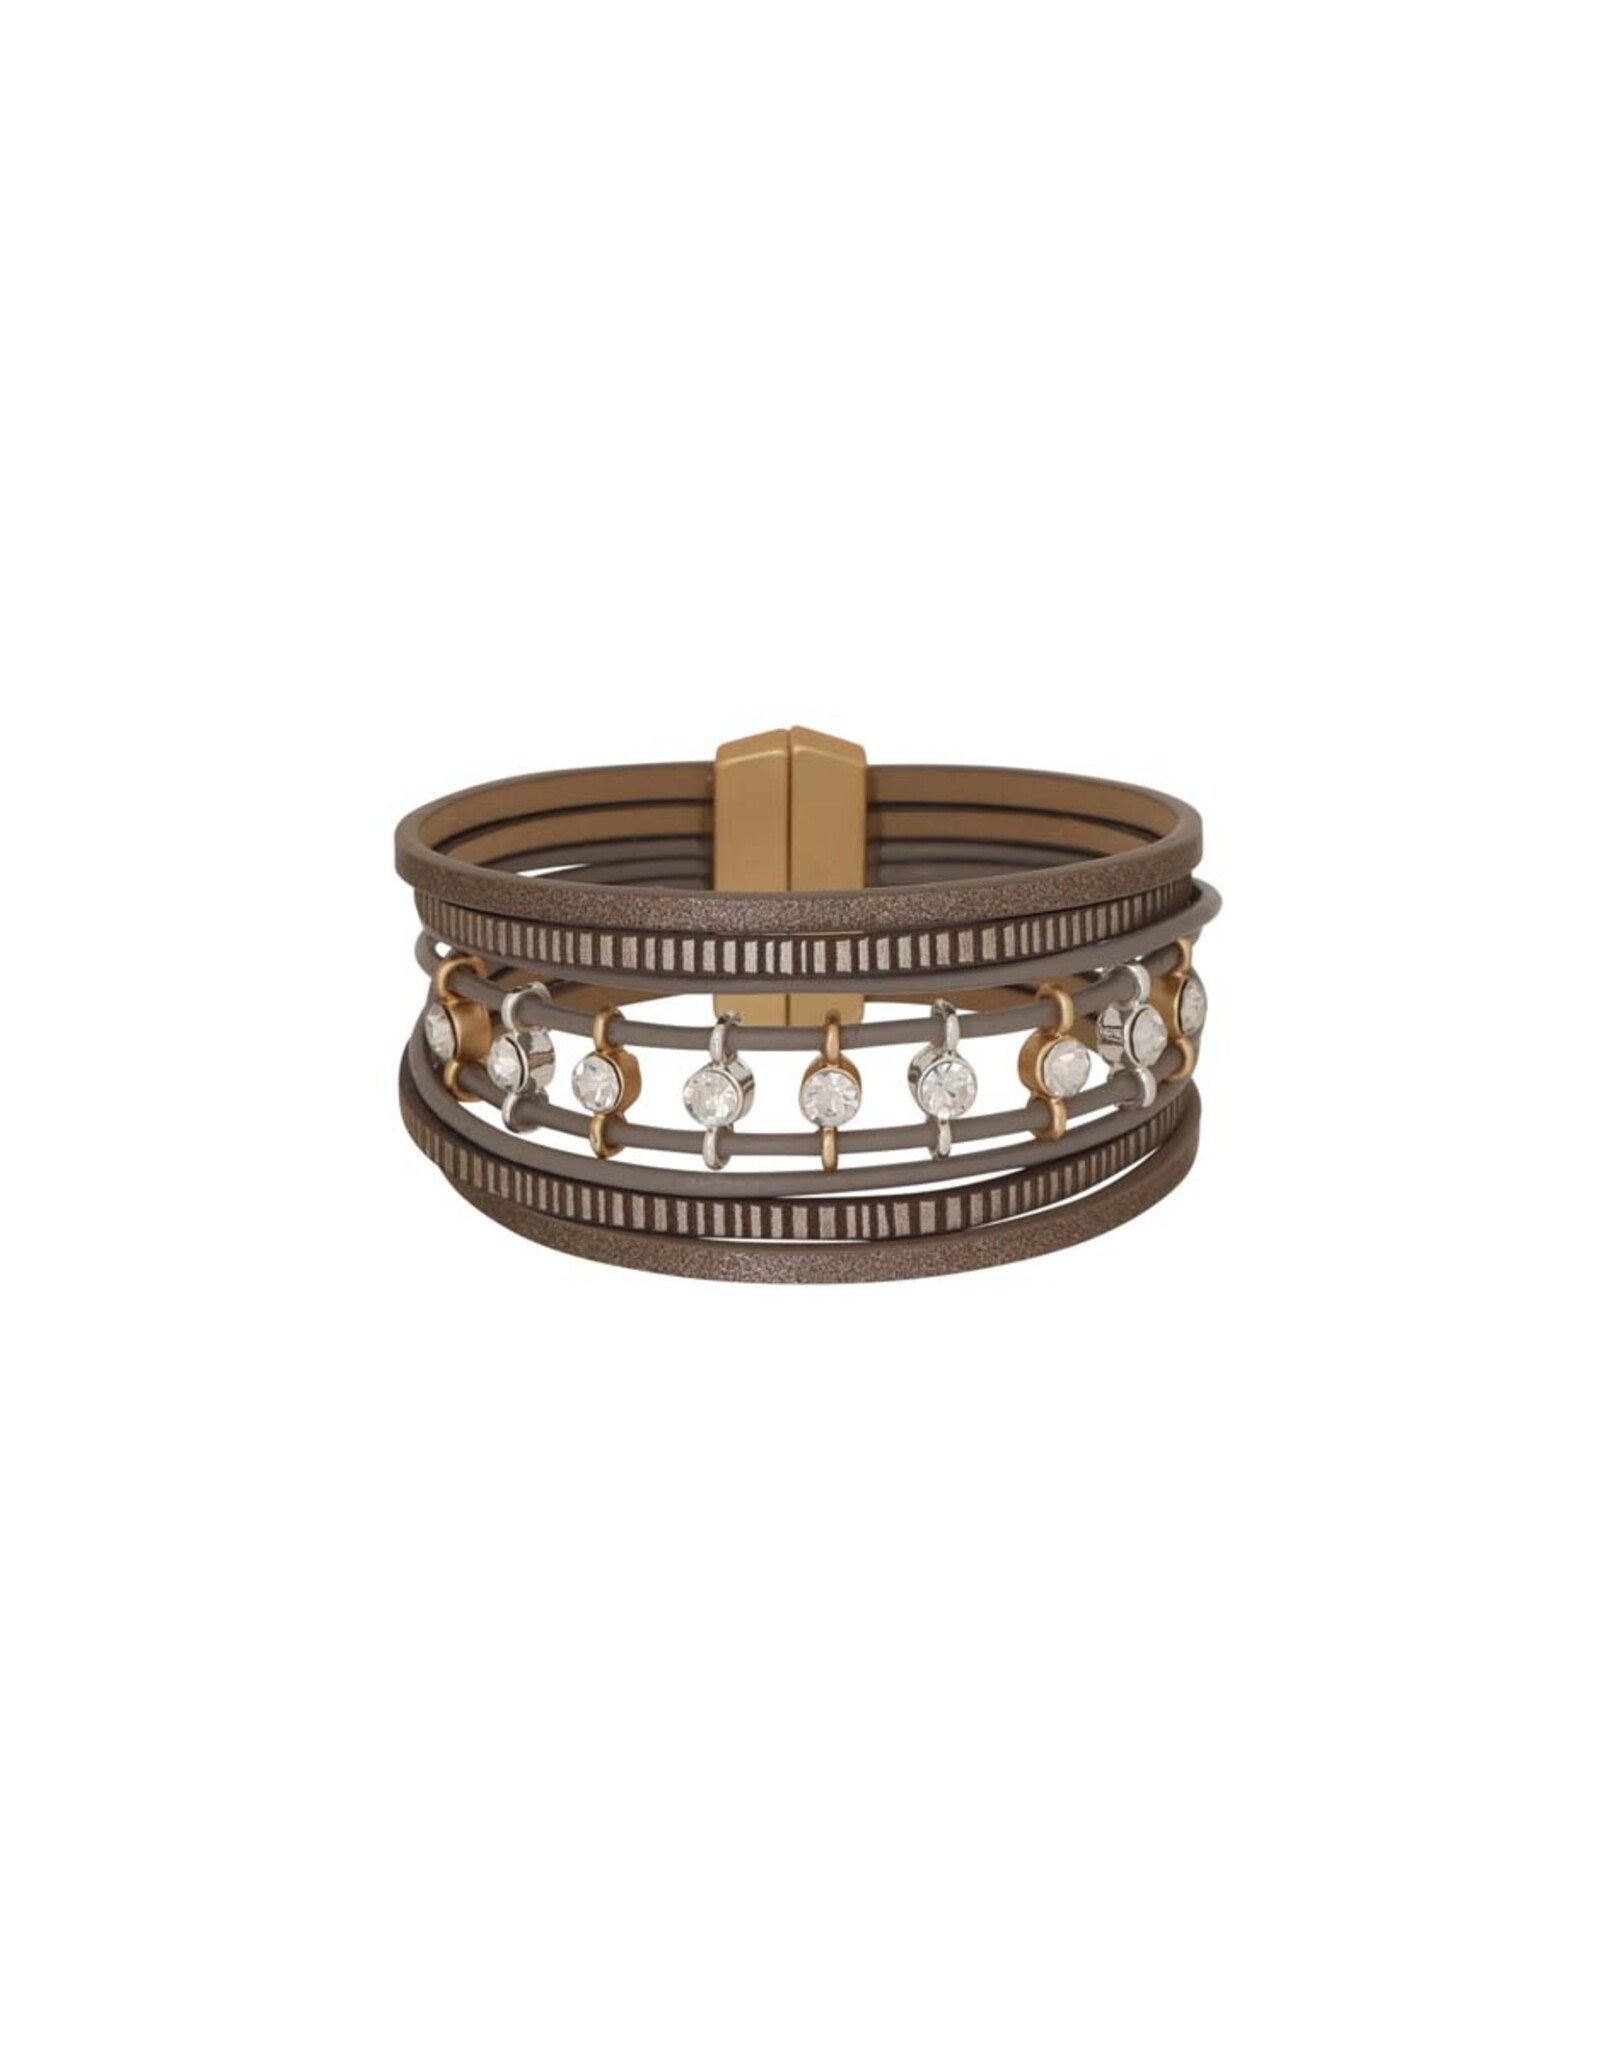 Merx Inc. Merx Fashion Bracelet Taupe+Two-Tone (Silver + Gold) 19cm